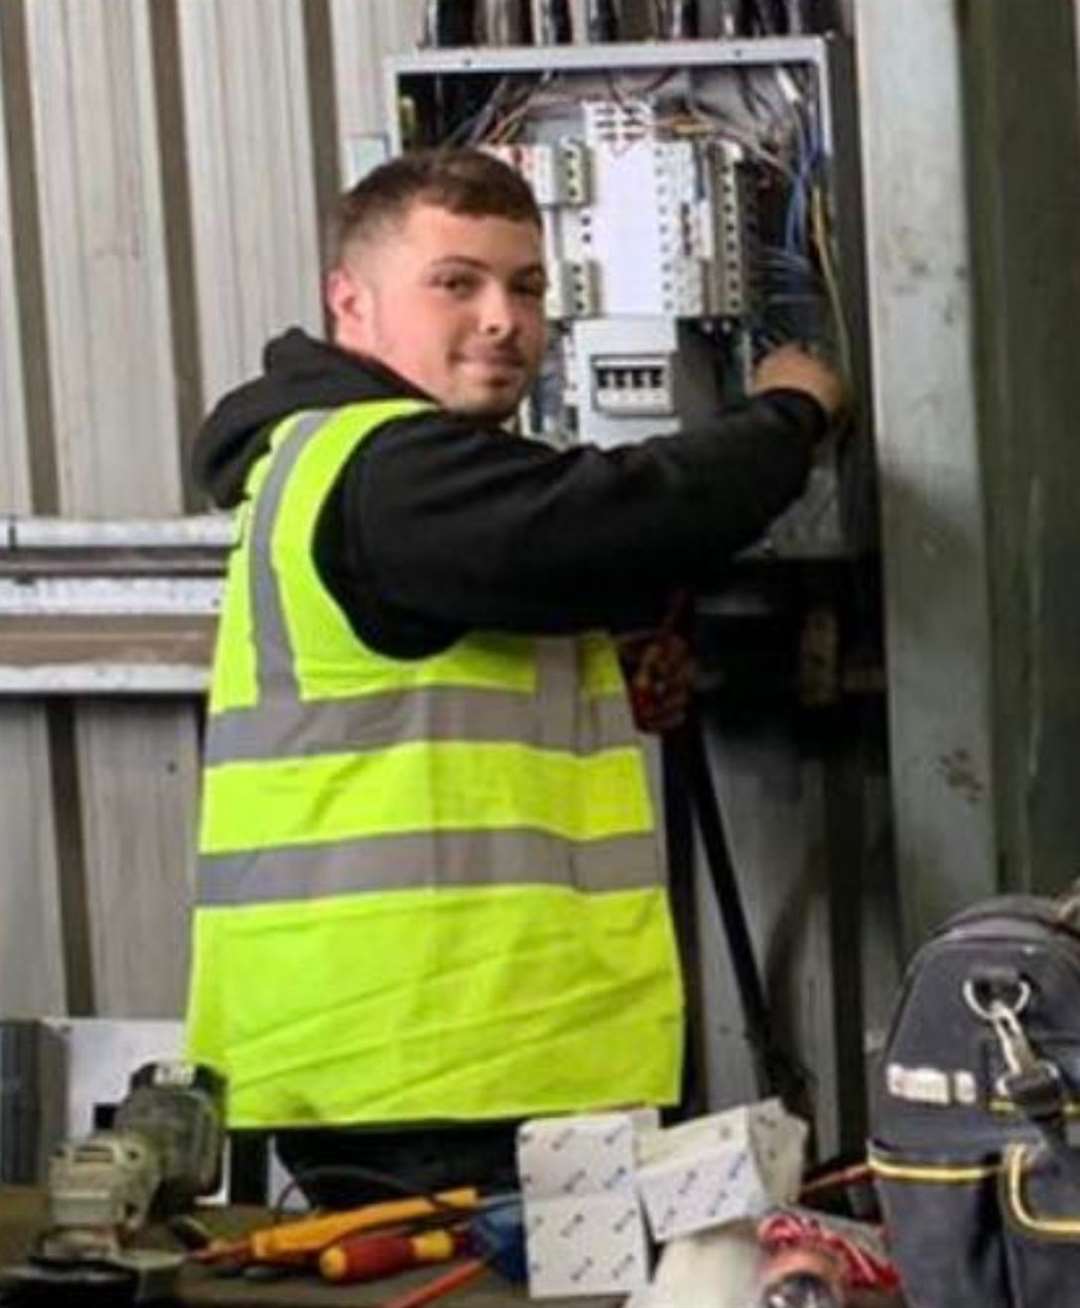 Callum Aitken - apprentice electrician feels "forgotten"